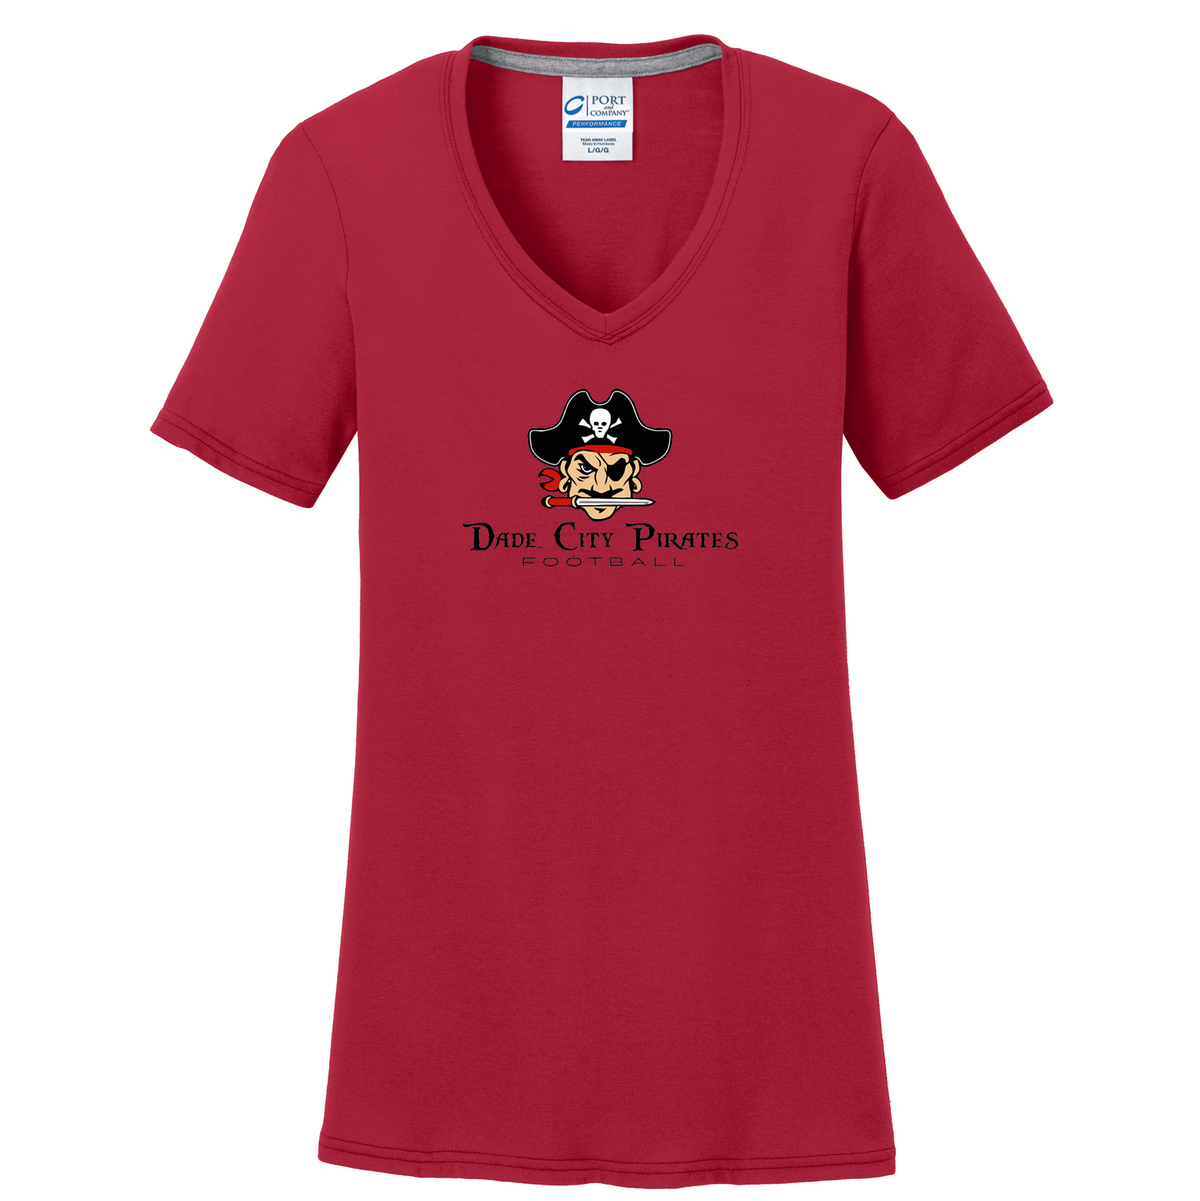 Dade City Pirates Women's T-Shirt